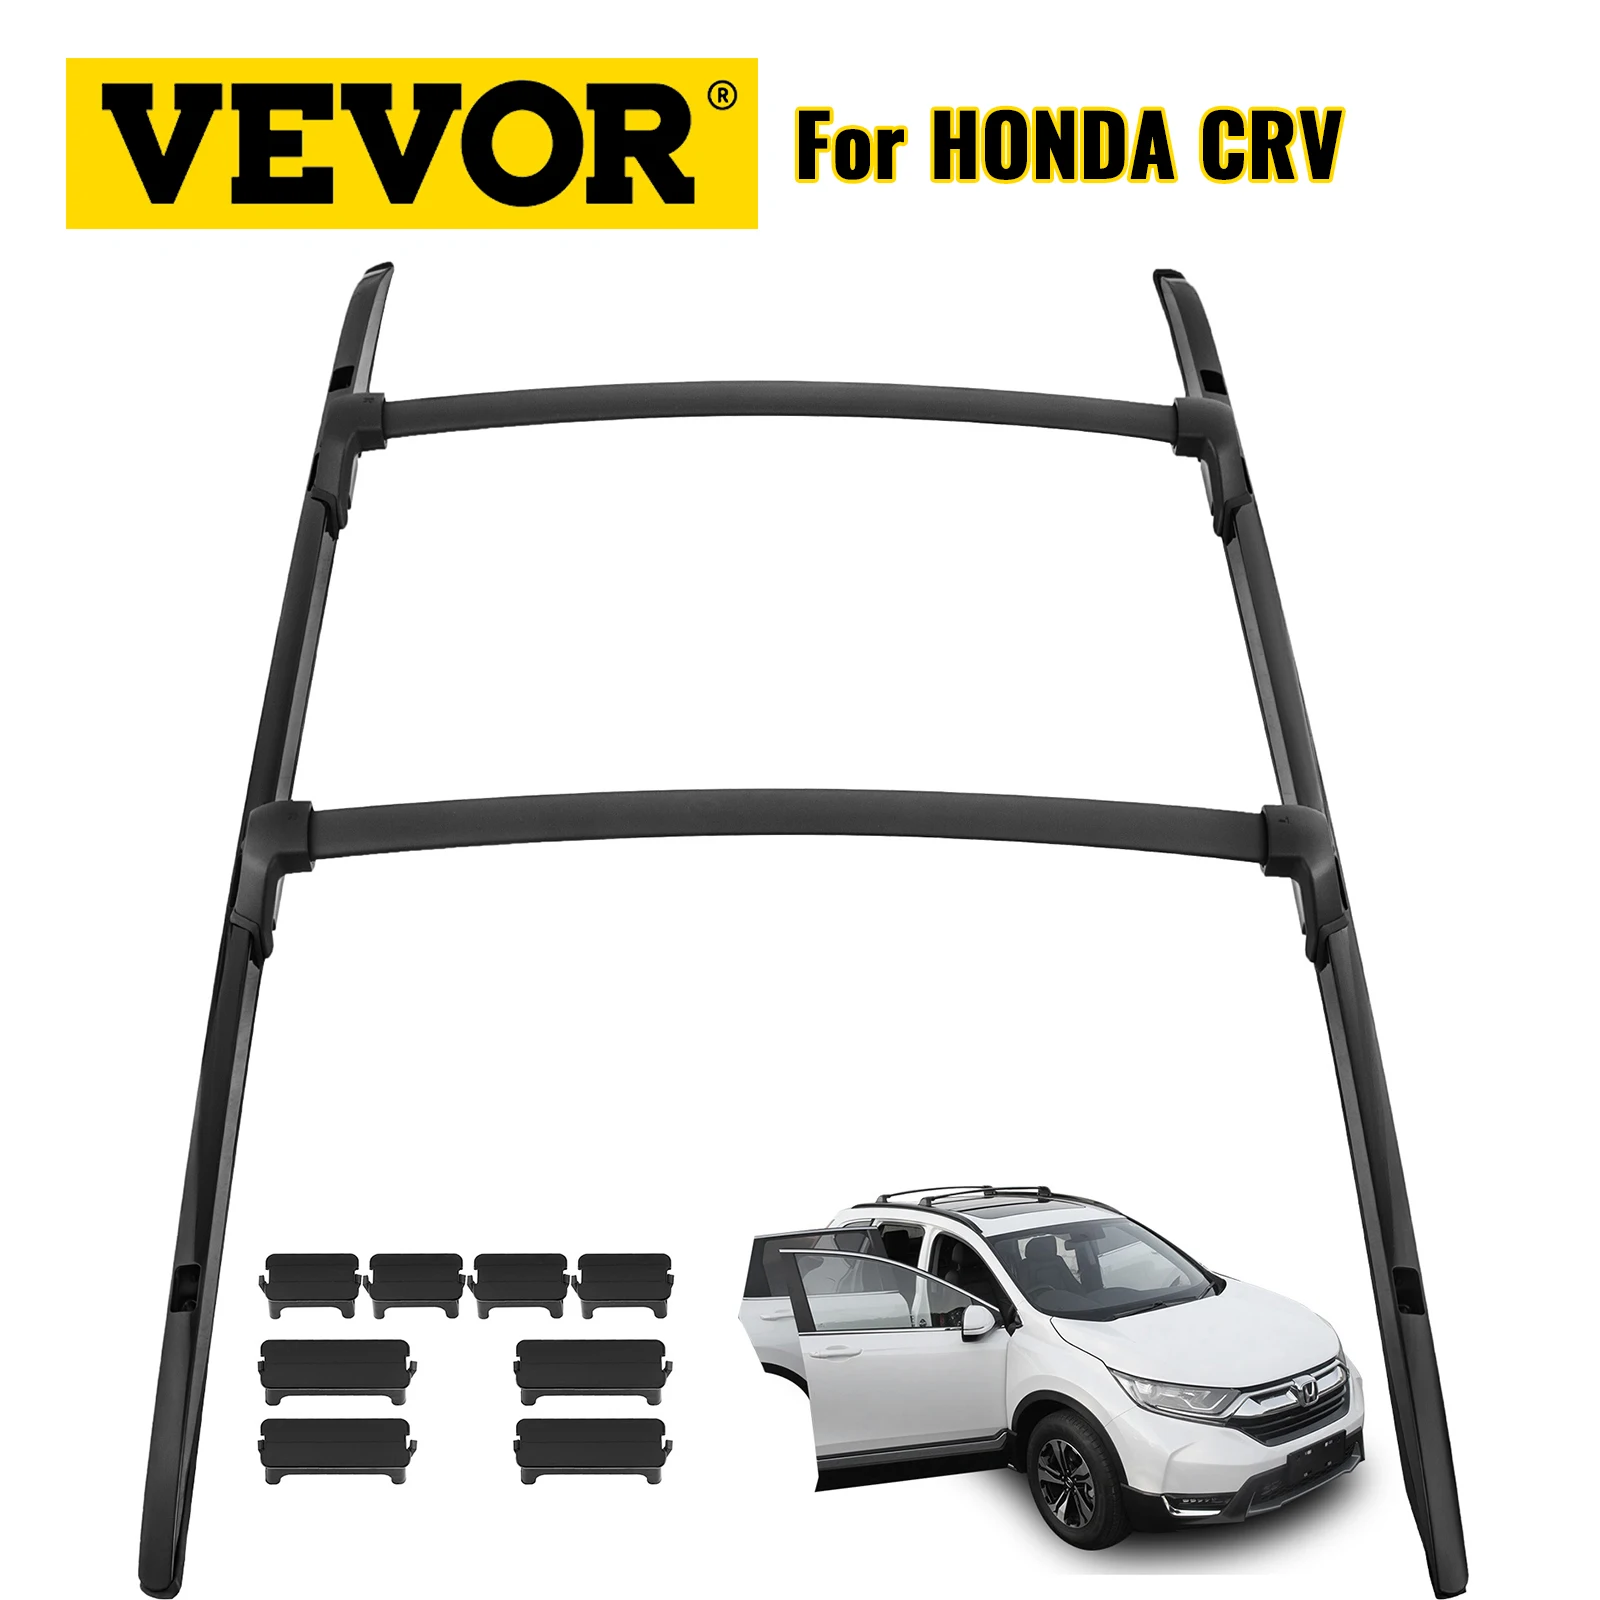 

VEVOR For HONDA CRV Roof Racks With Side Rails 165LBS Load Capacity 2Pcs Aluminum Alloy Rack Cross Bars Side Rails Luggage Case